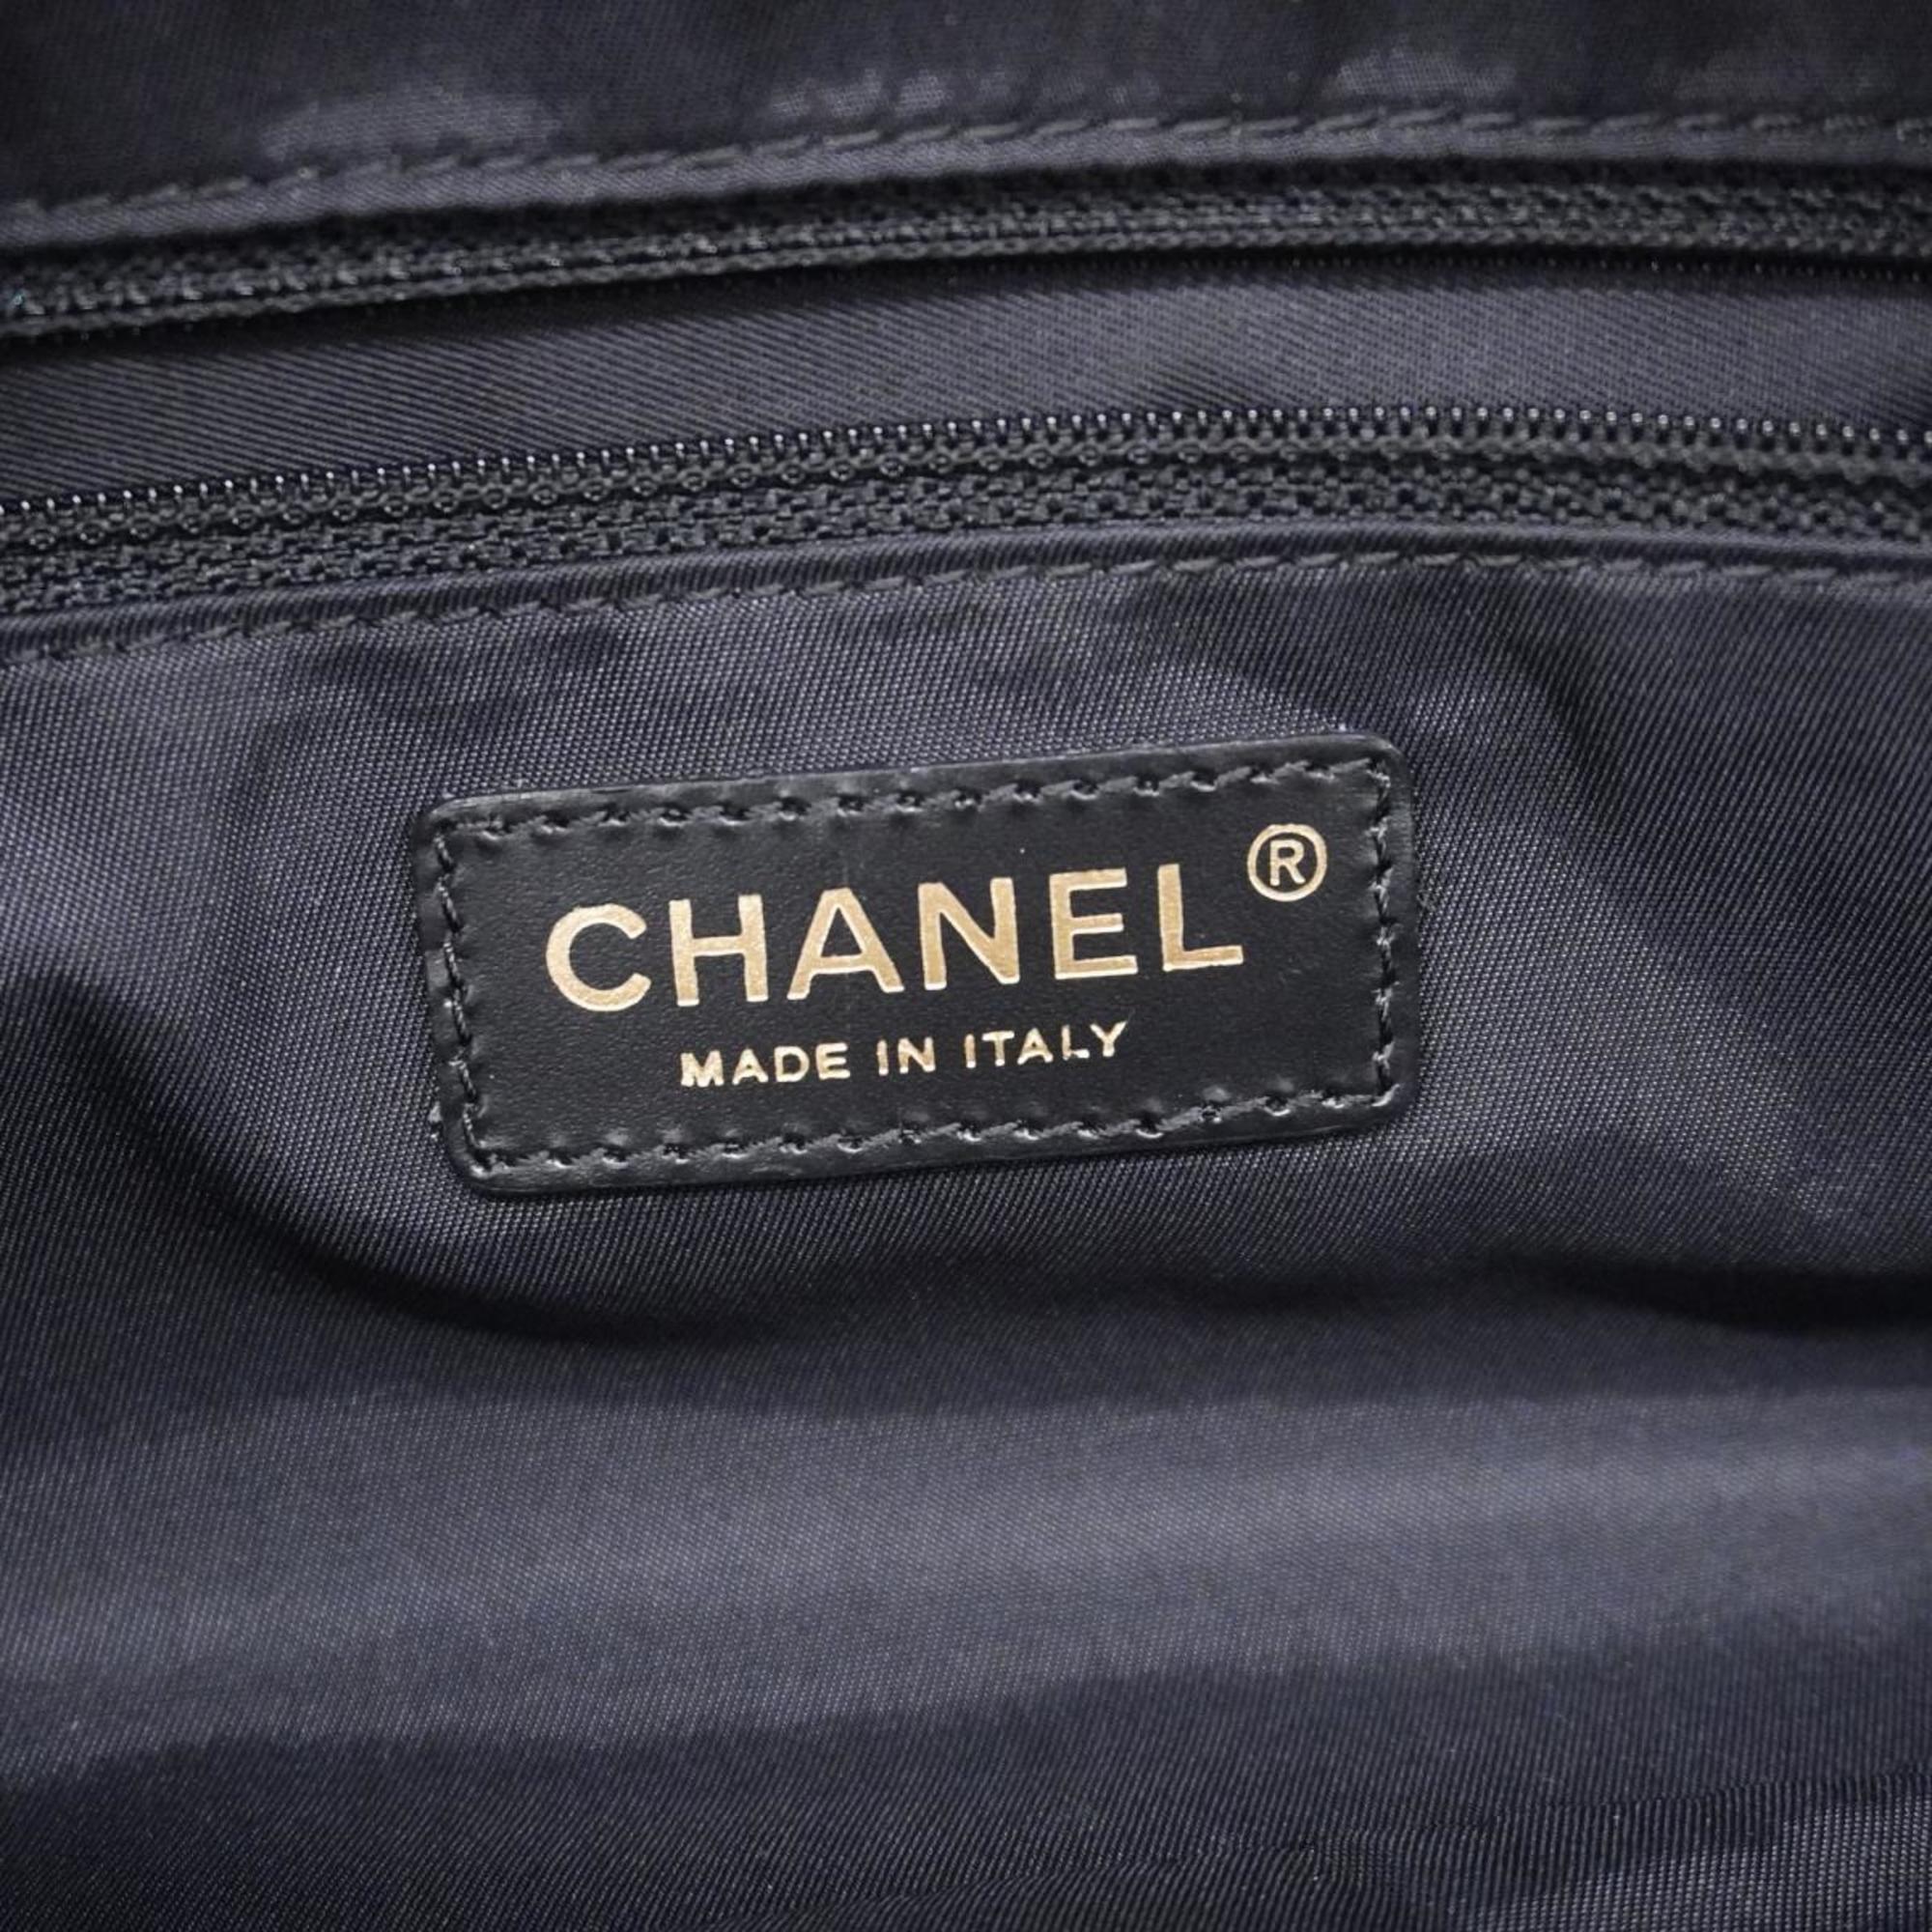 Chanel handbag new travel nylon black champagne ladies